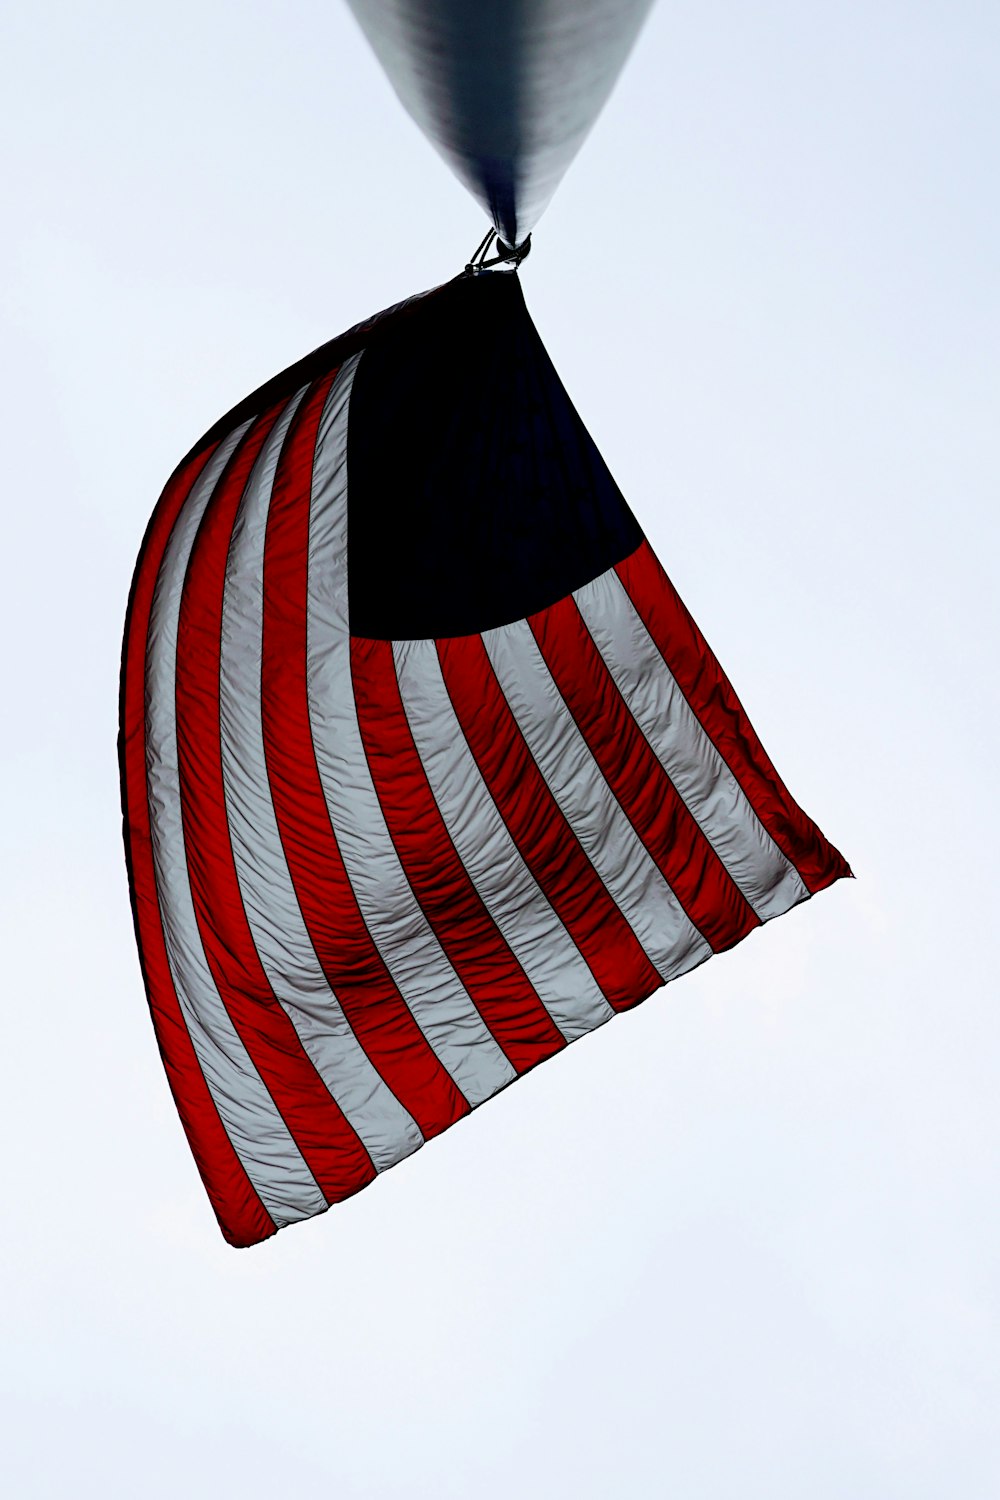 Bandeira do Estado Unidos da América no post de black metal durante o dia